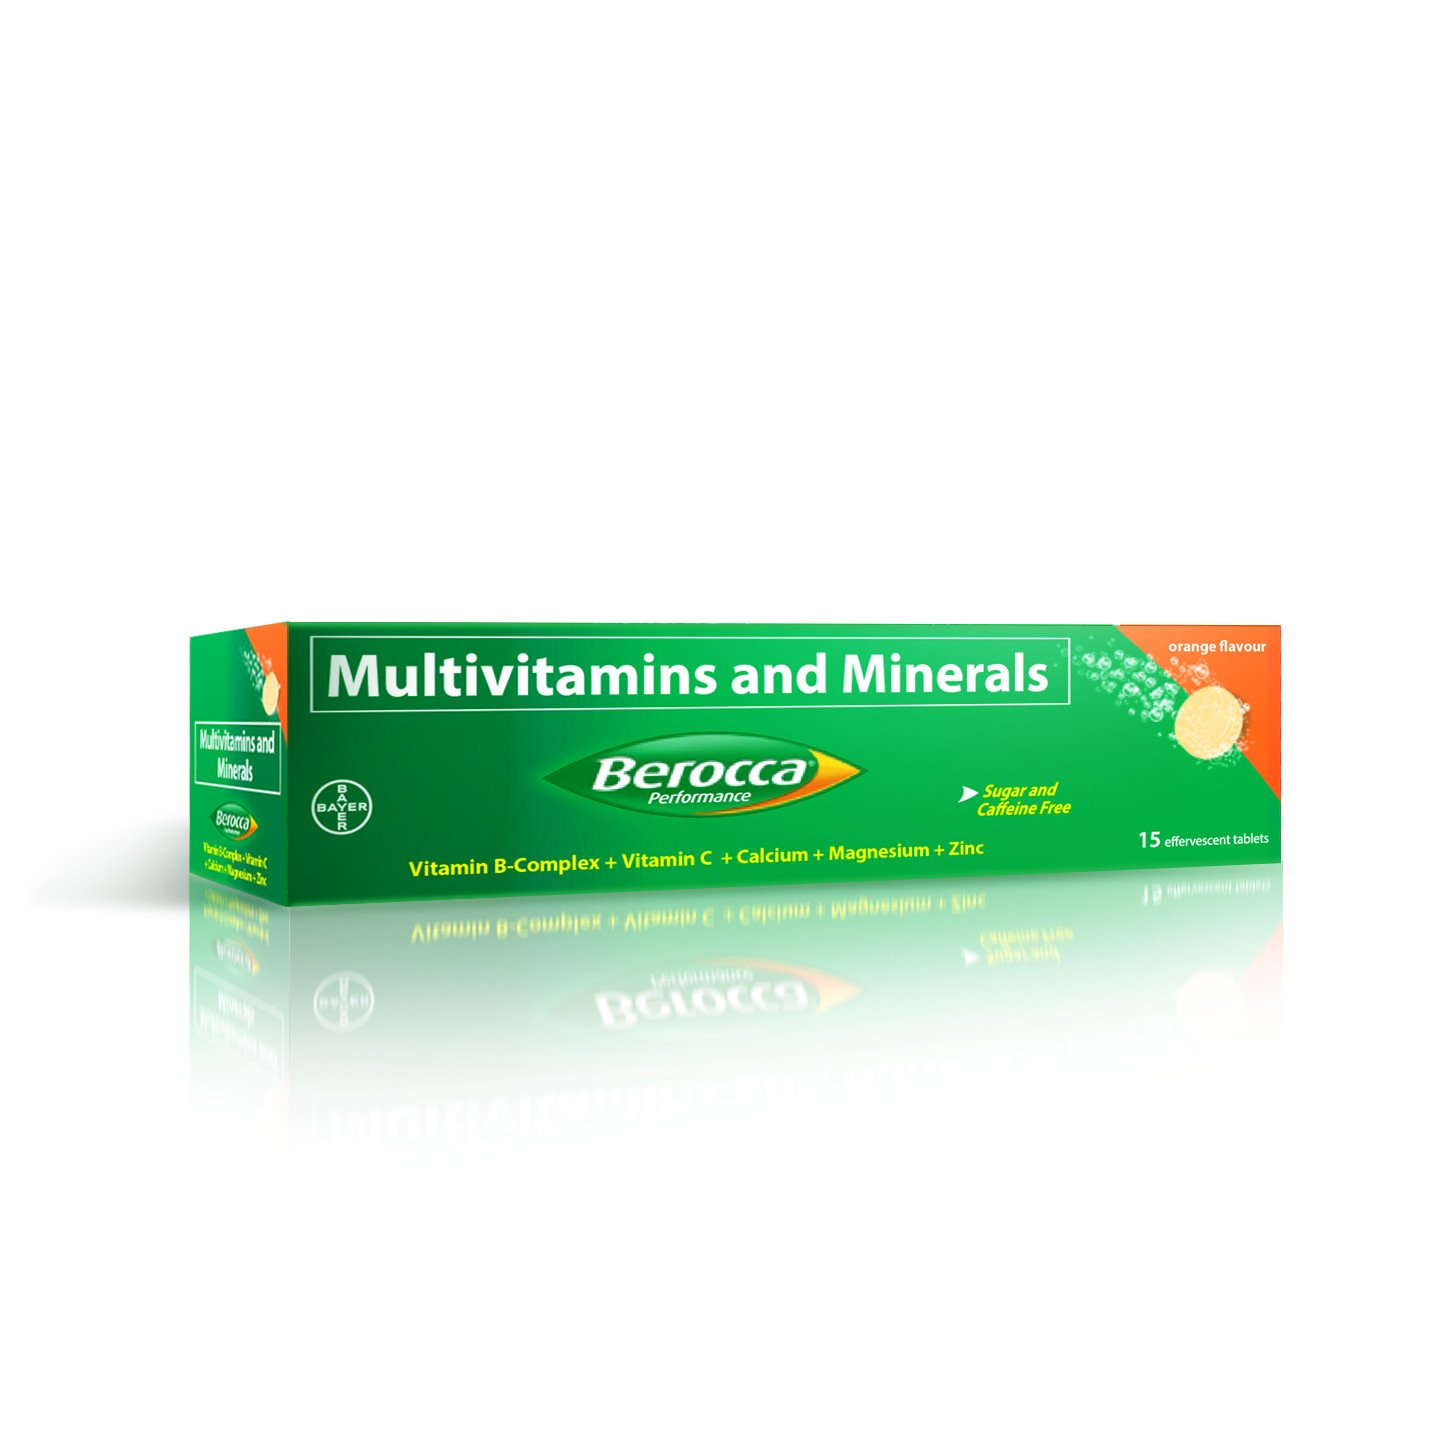 Berocca Multivitamins